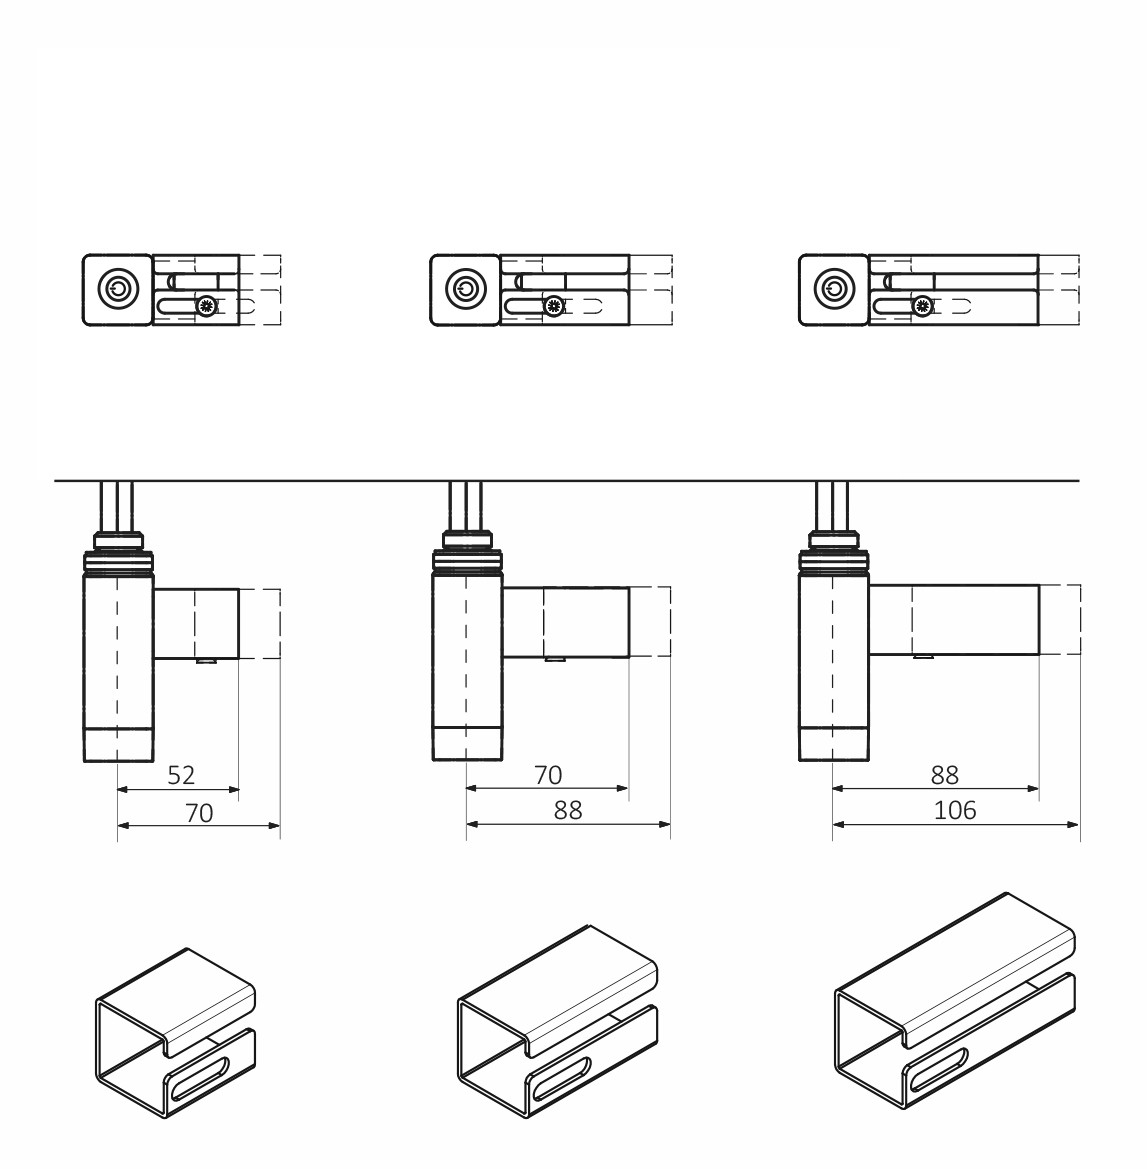 <p>M - gerades Kabel ohne Stecker mit Kabelblende (Standardlänge Kabelblende: 52-70mm)</p>
